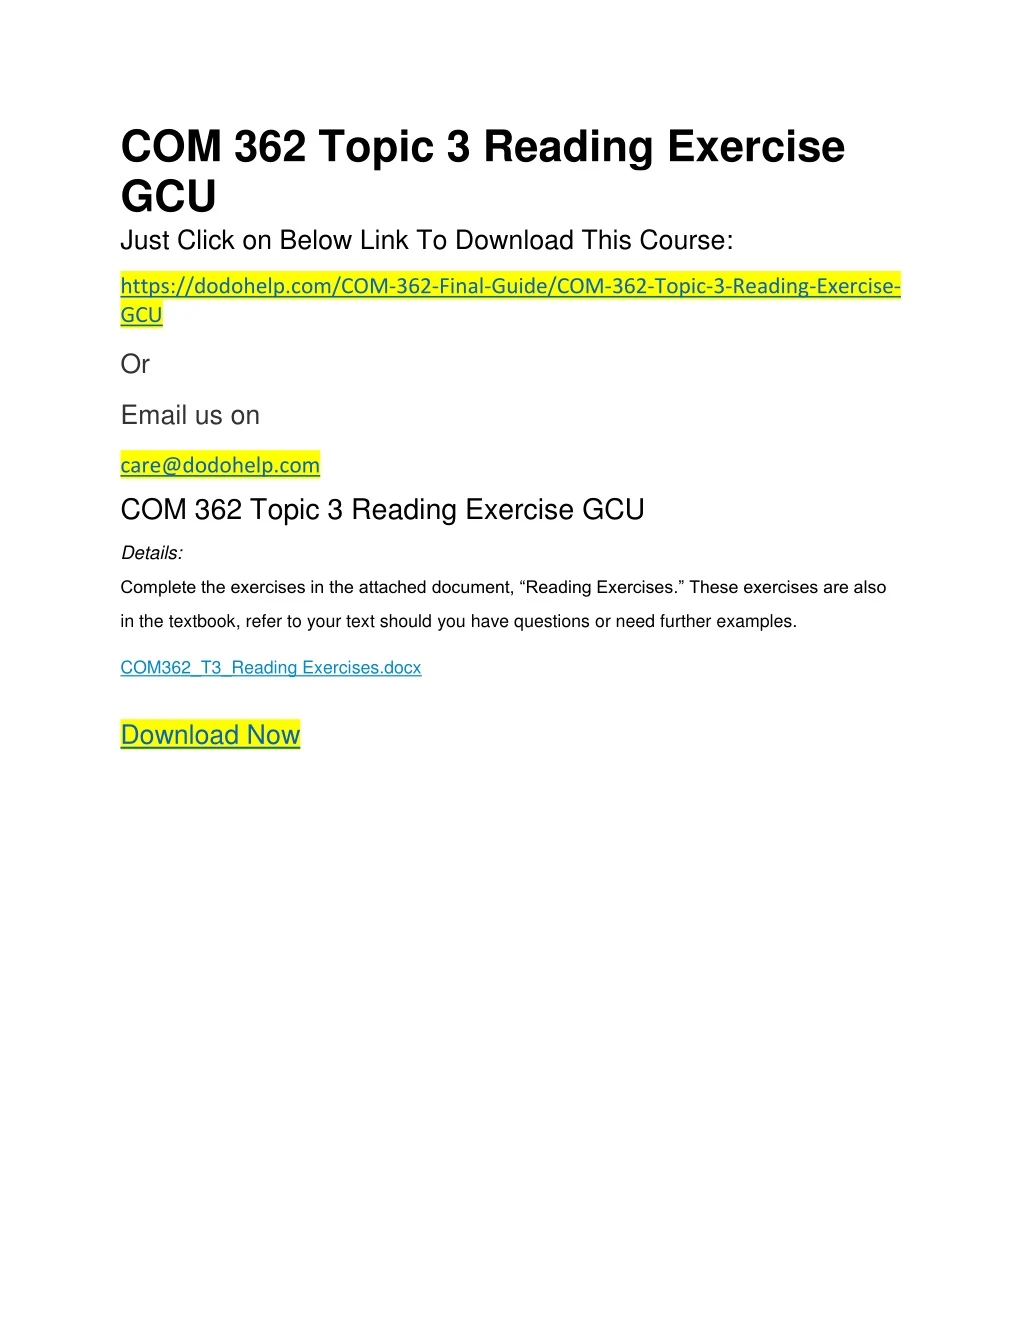 com 362 topic 3 reading exercise gcu just click